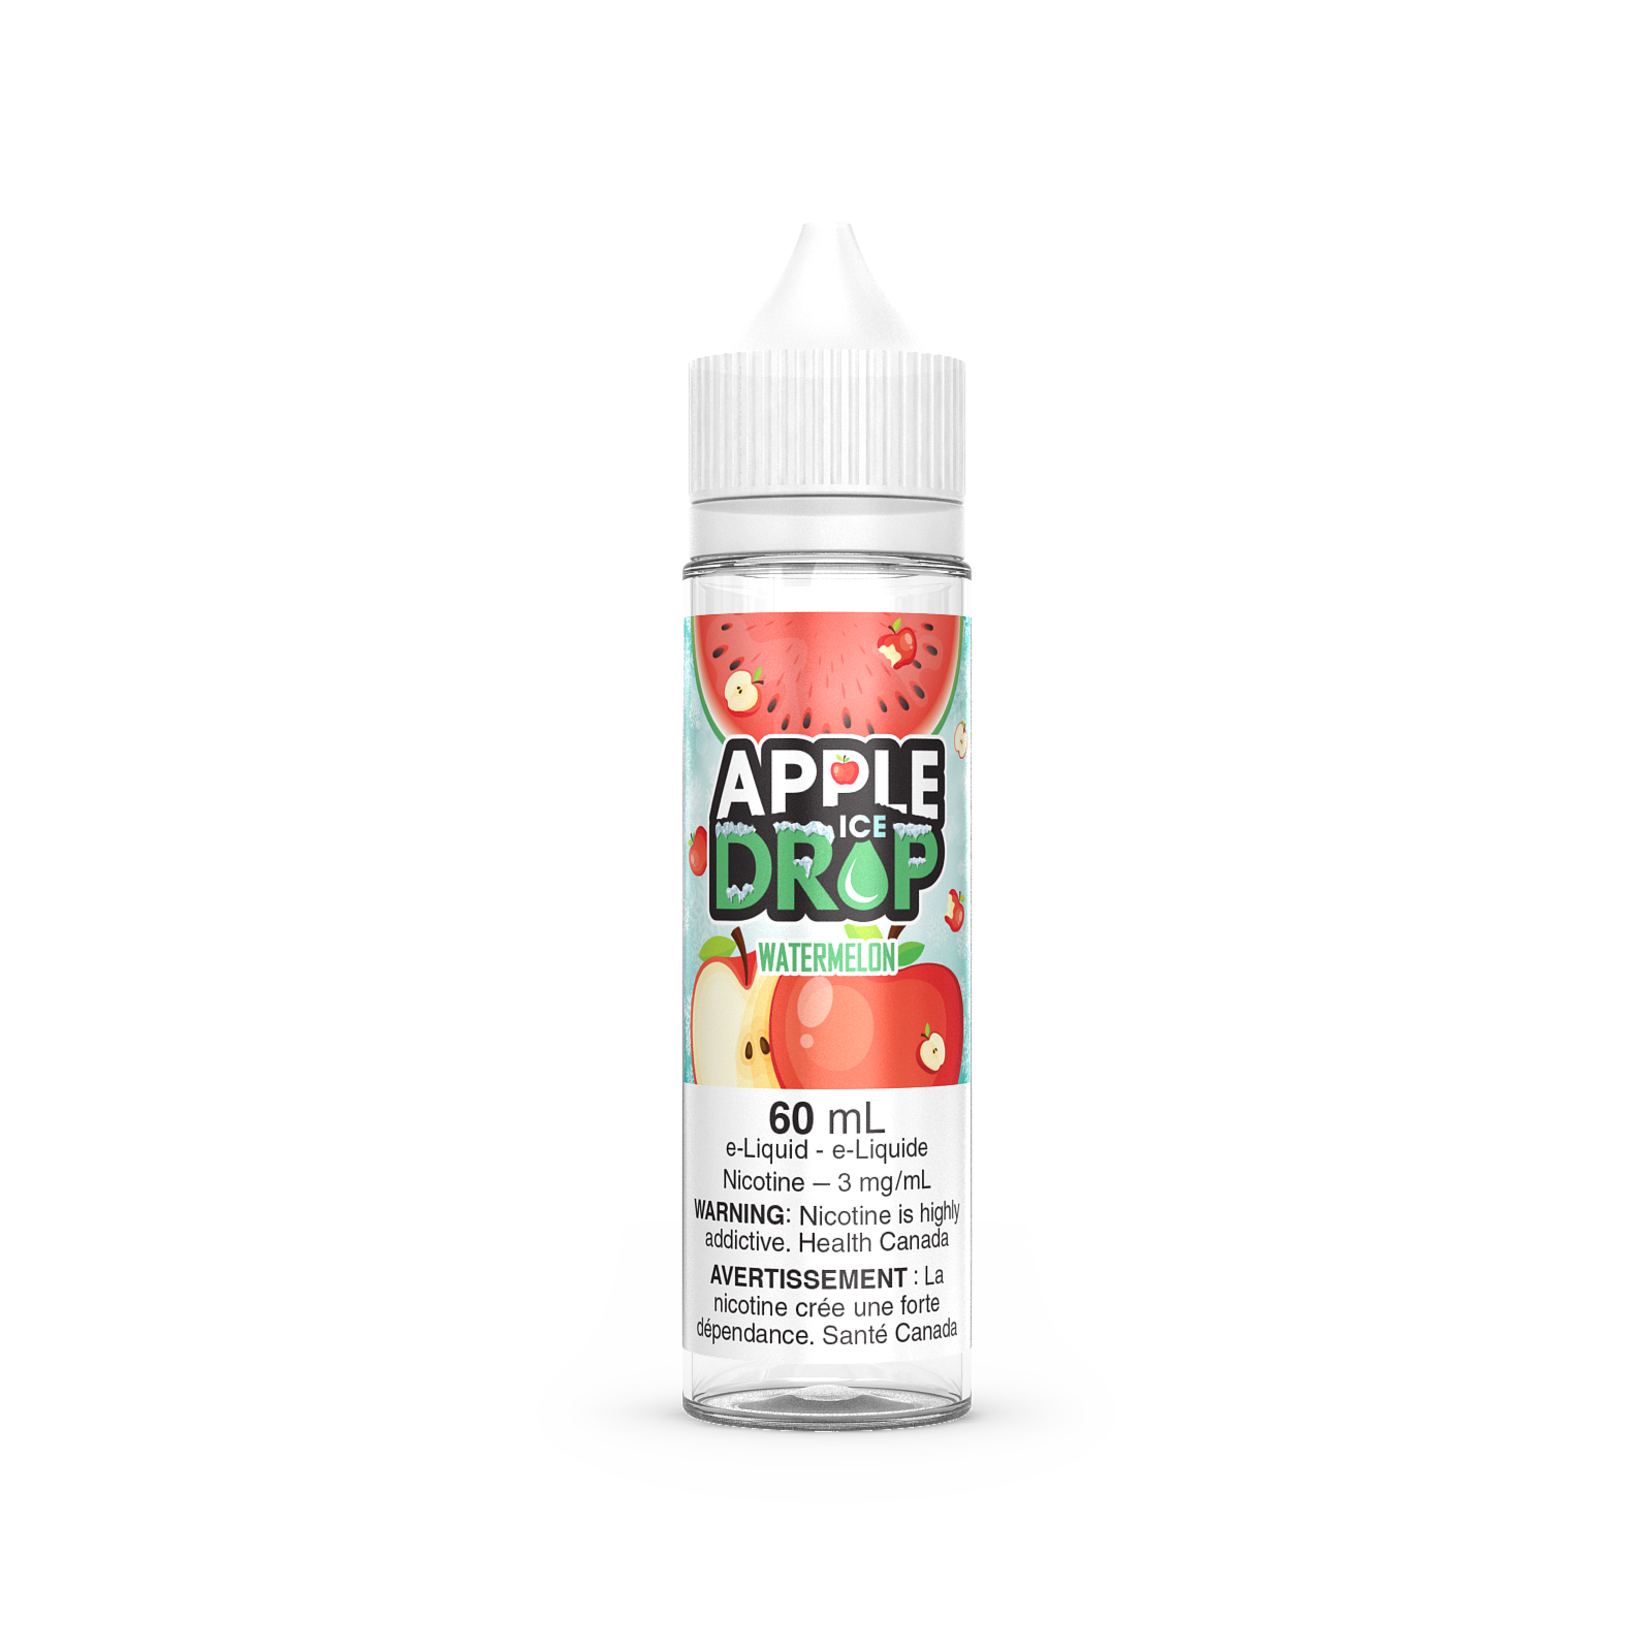 Apple Drop Ice Watermelon - Apple Drop Ice